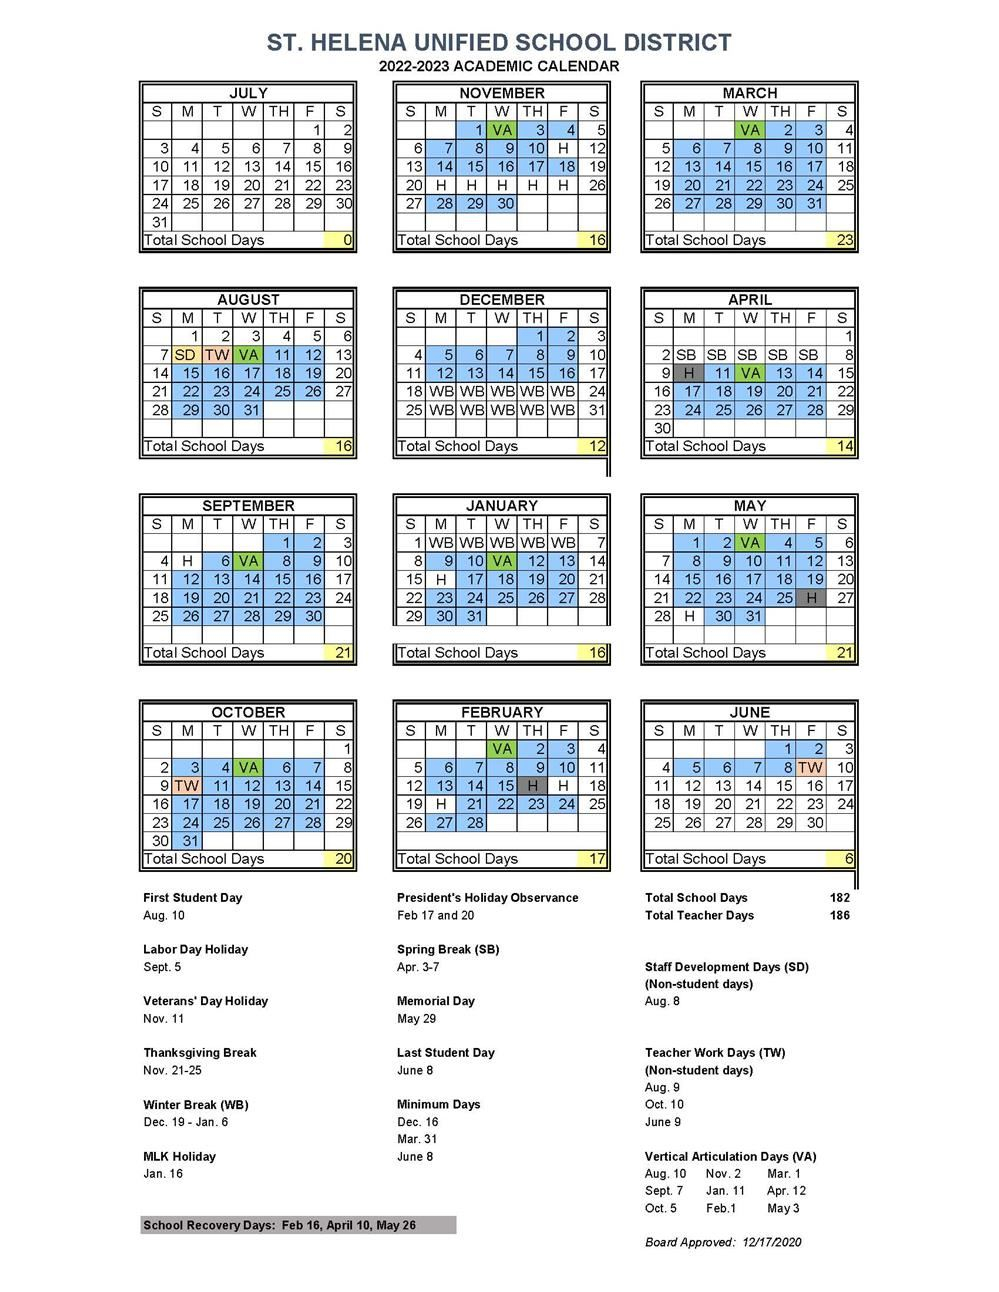 Academic Calendar 2022 2023 2 